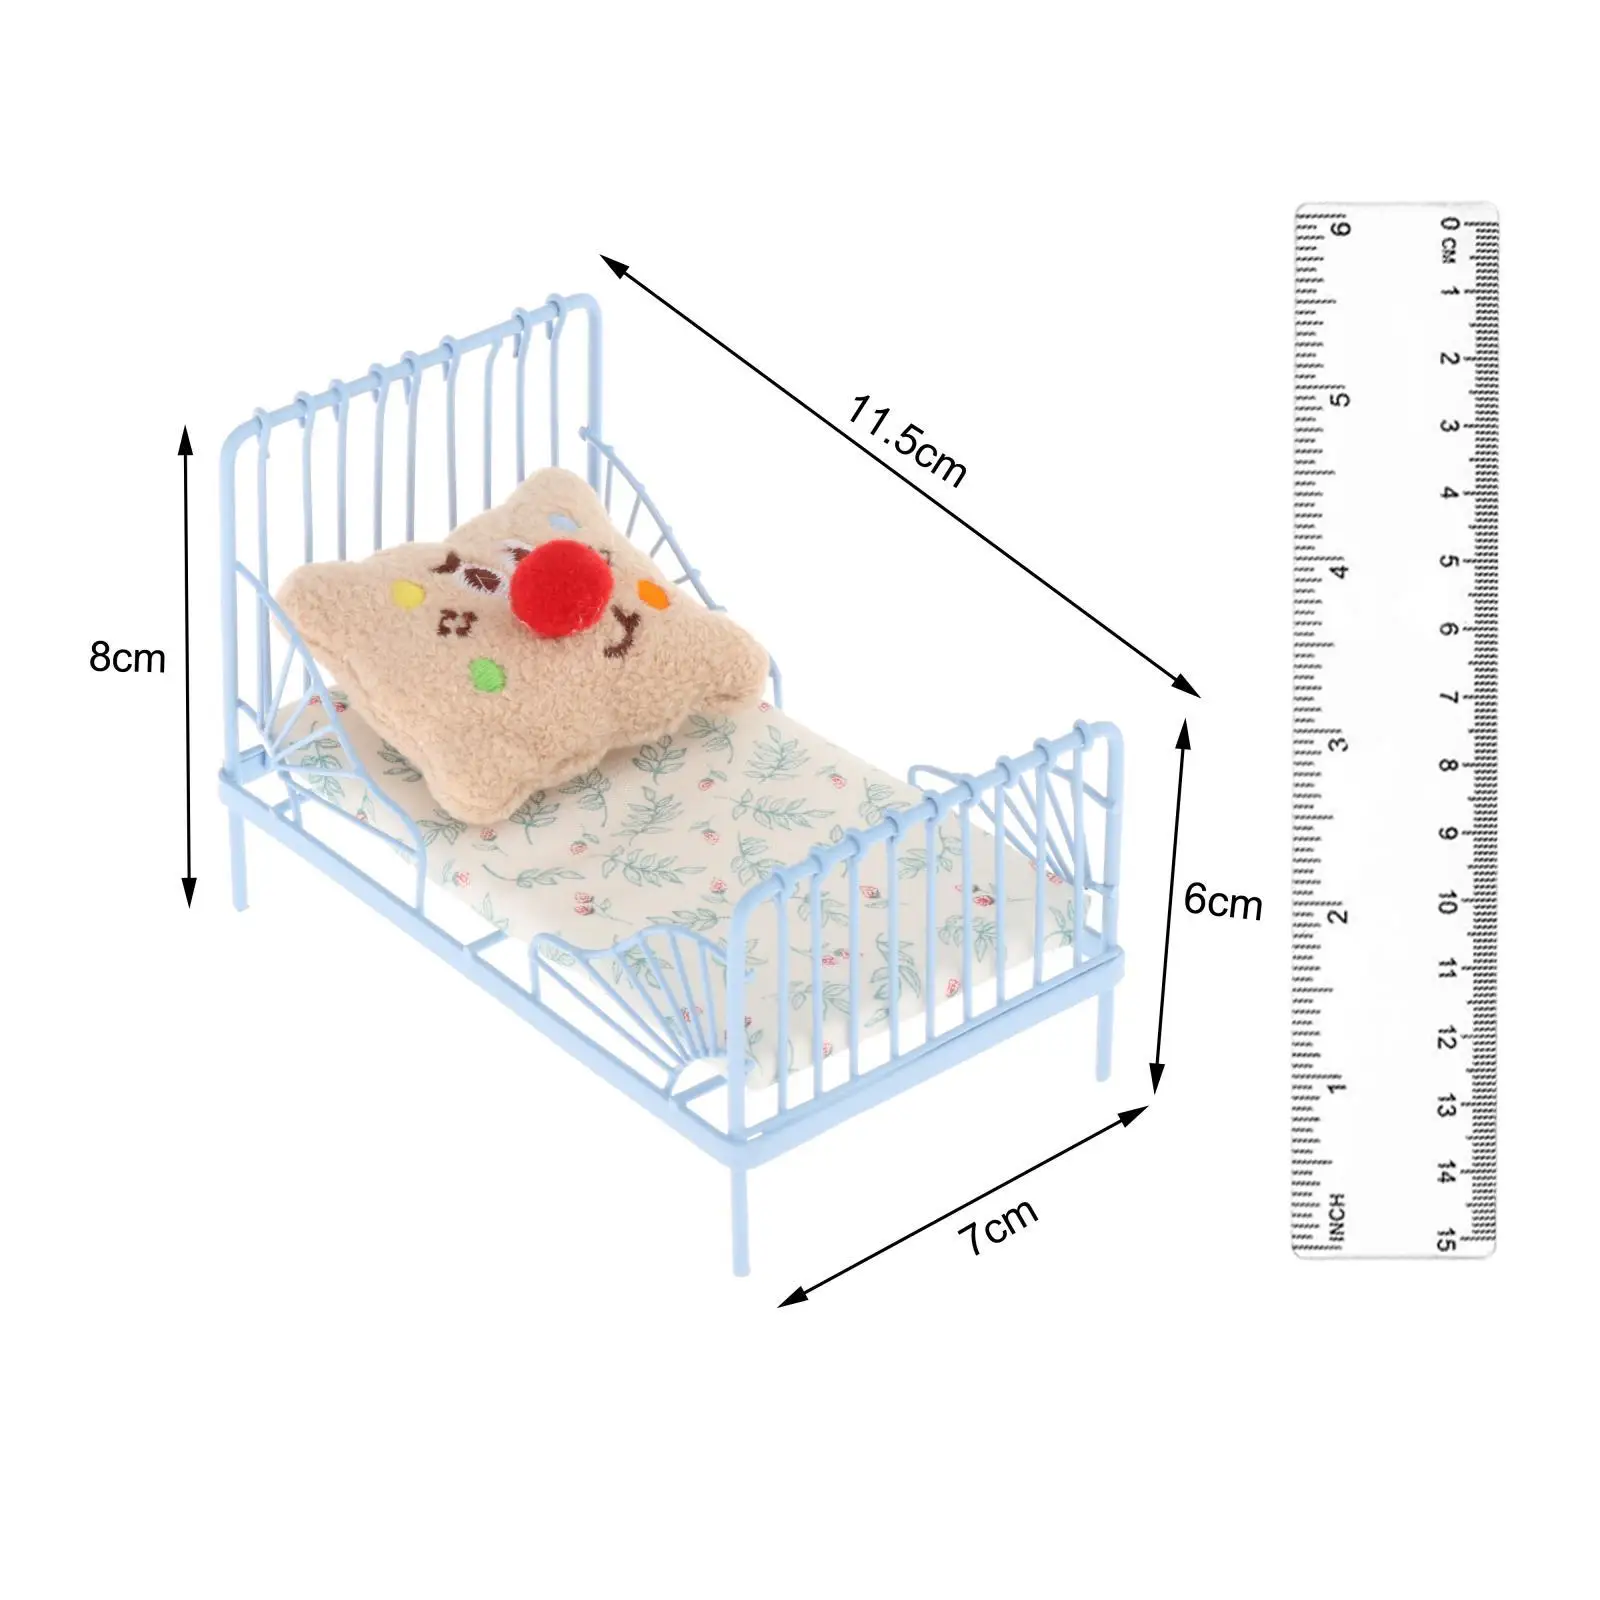 1:12 Dollhouse Miniature Bed Bird Pattern Miniature Scene Model 1:12 Dollhouse